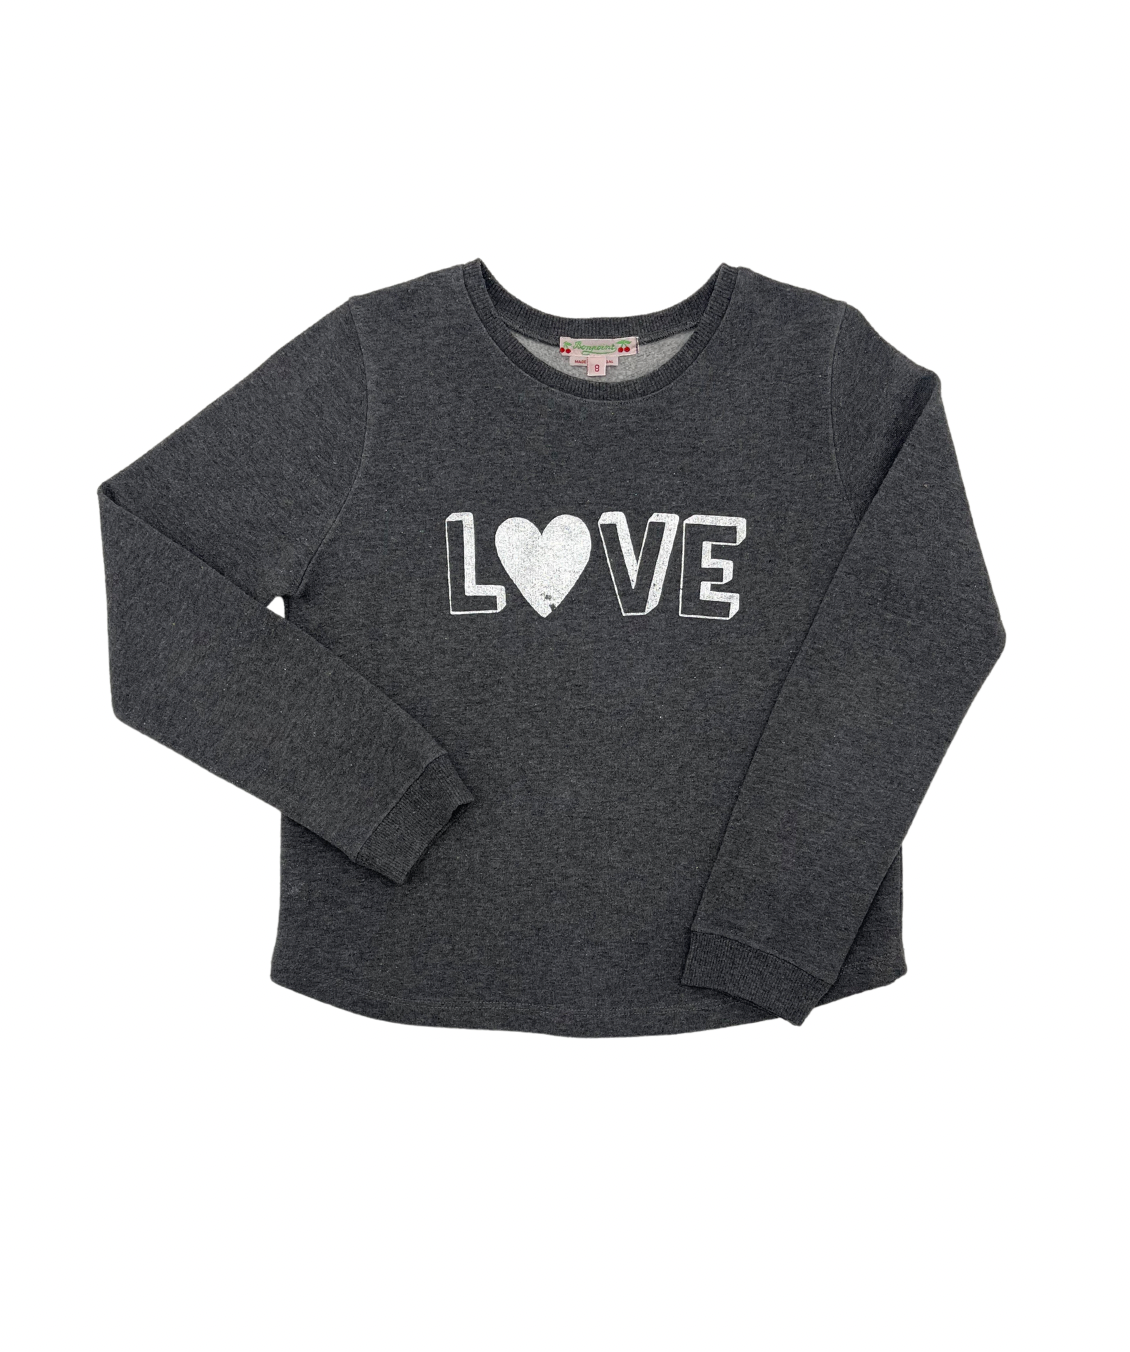 BONPOINT - Love sweatshirt - 8 years old